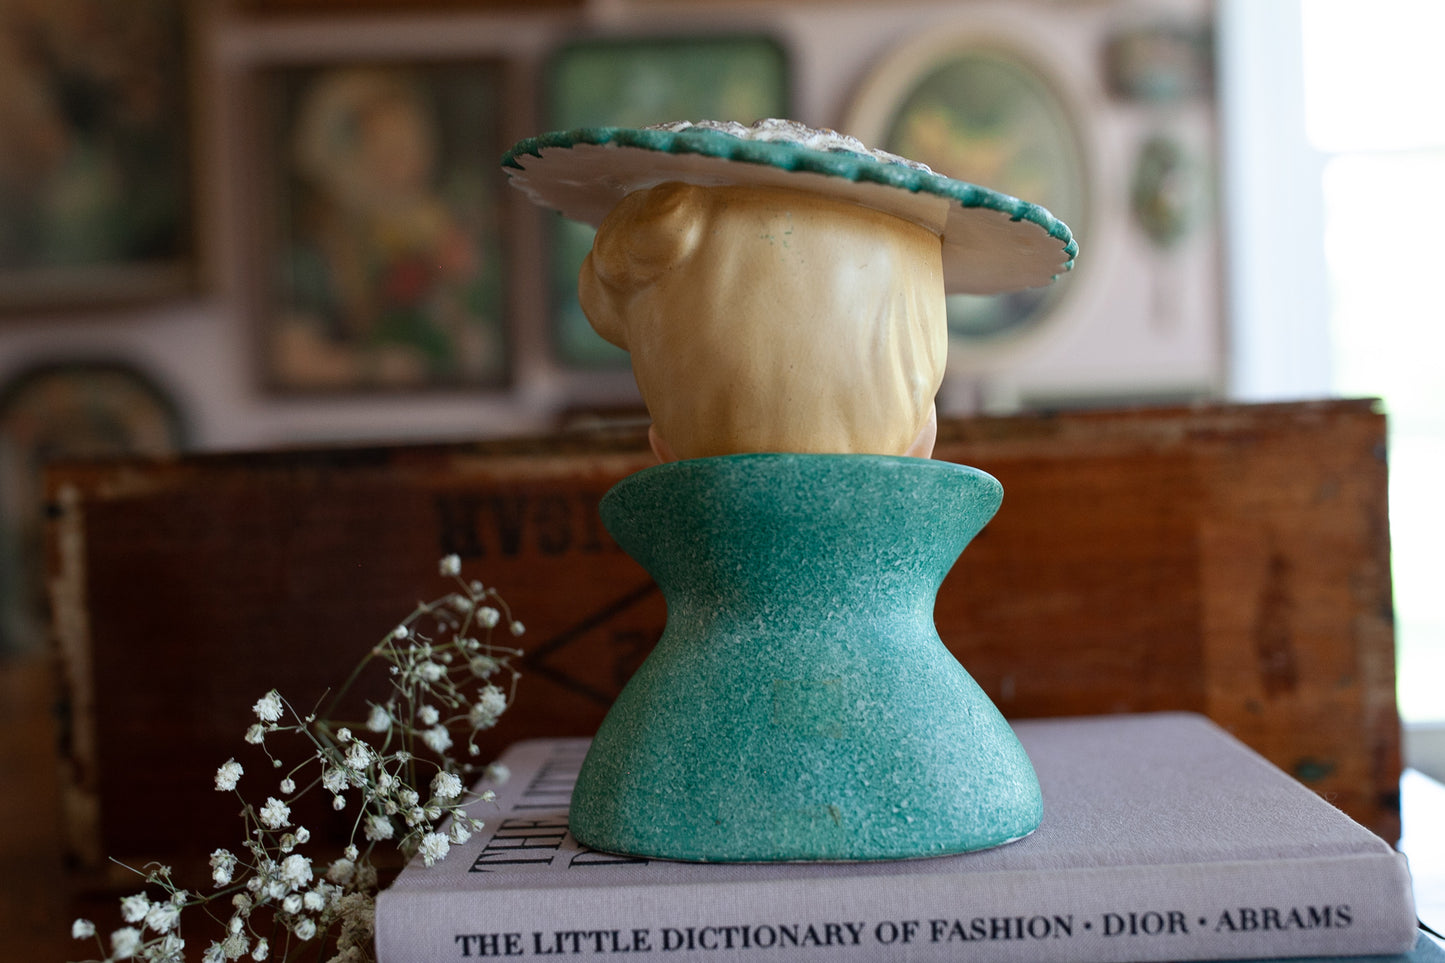 Vintage Lady Head Vase - Napco